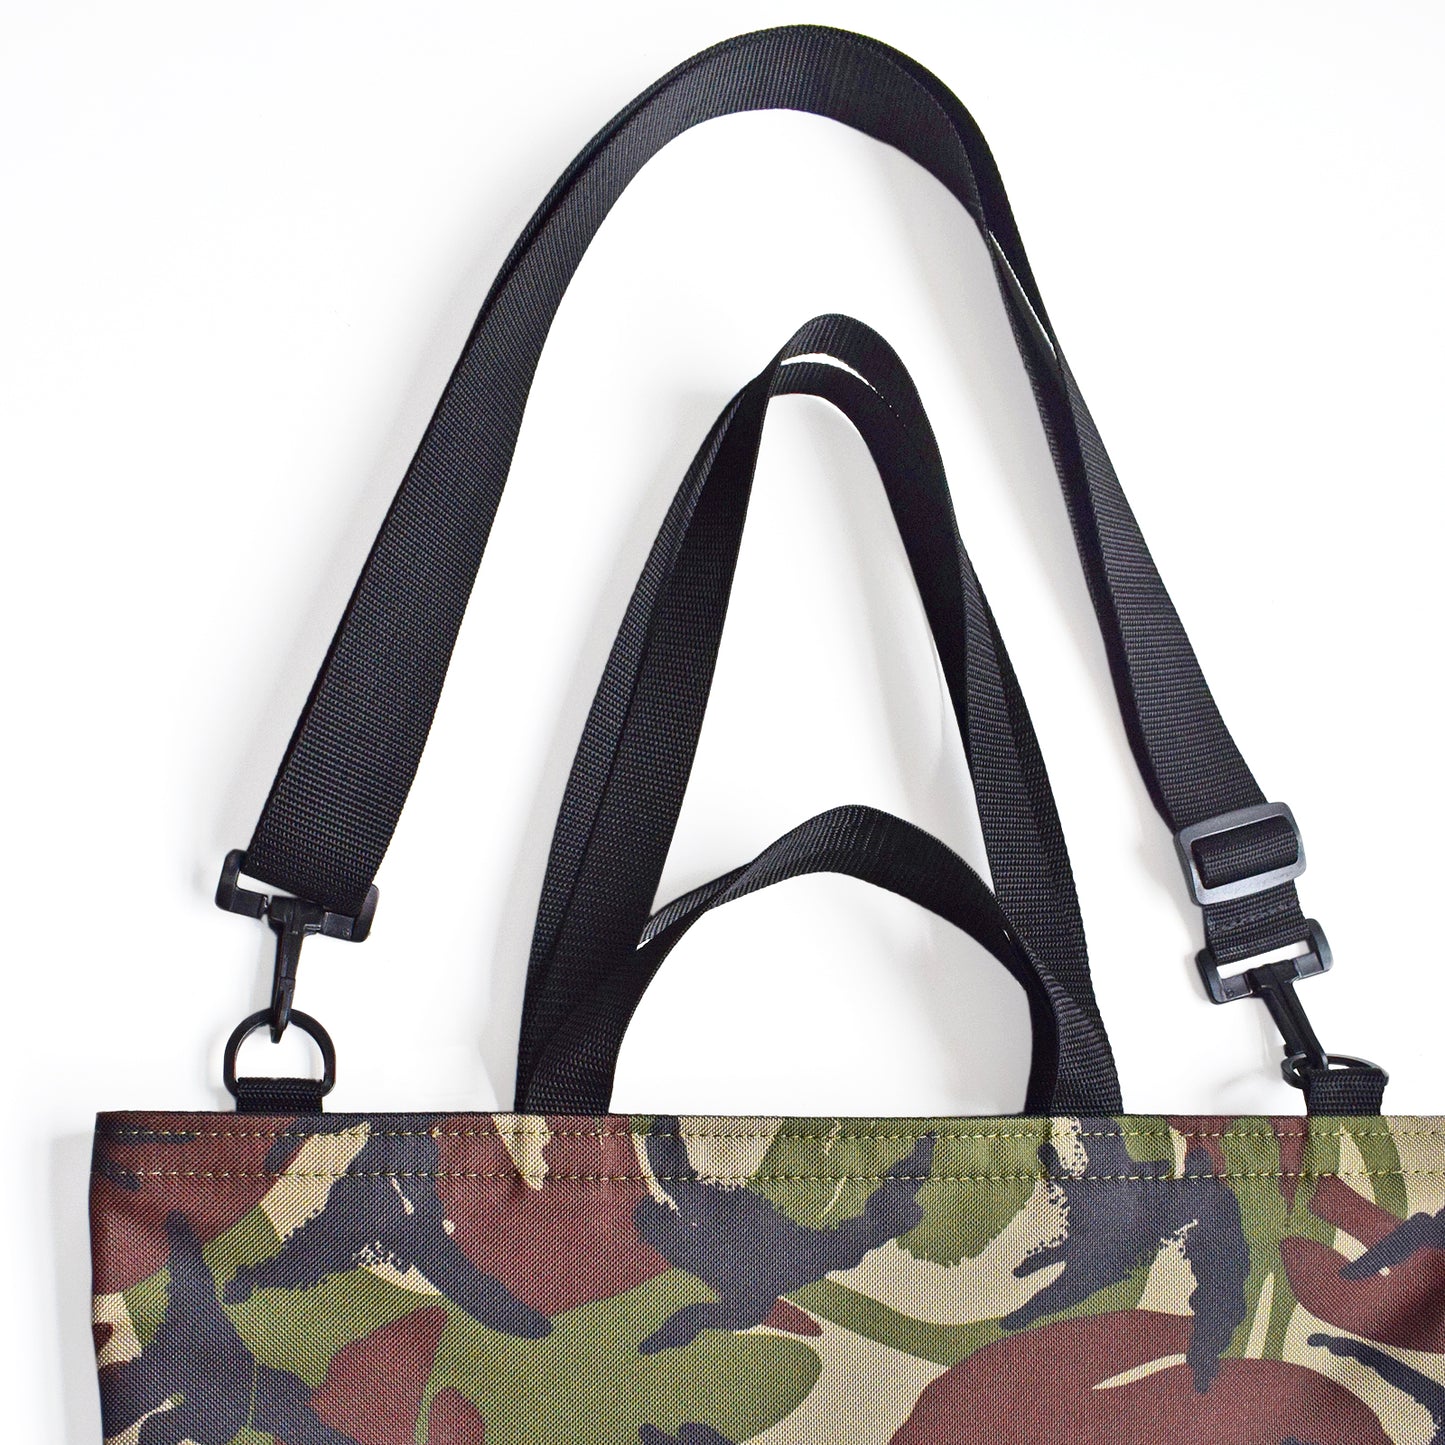 Black Shoulder straps and handles on tote bag  camo printed 